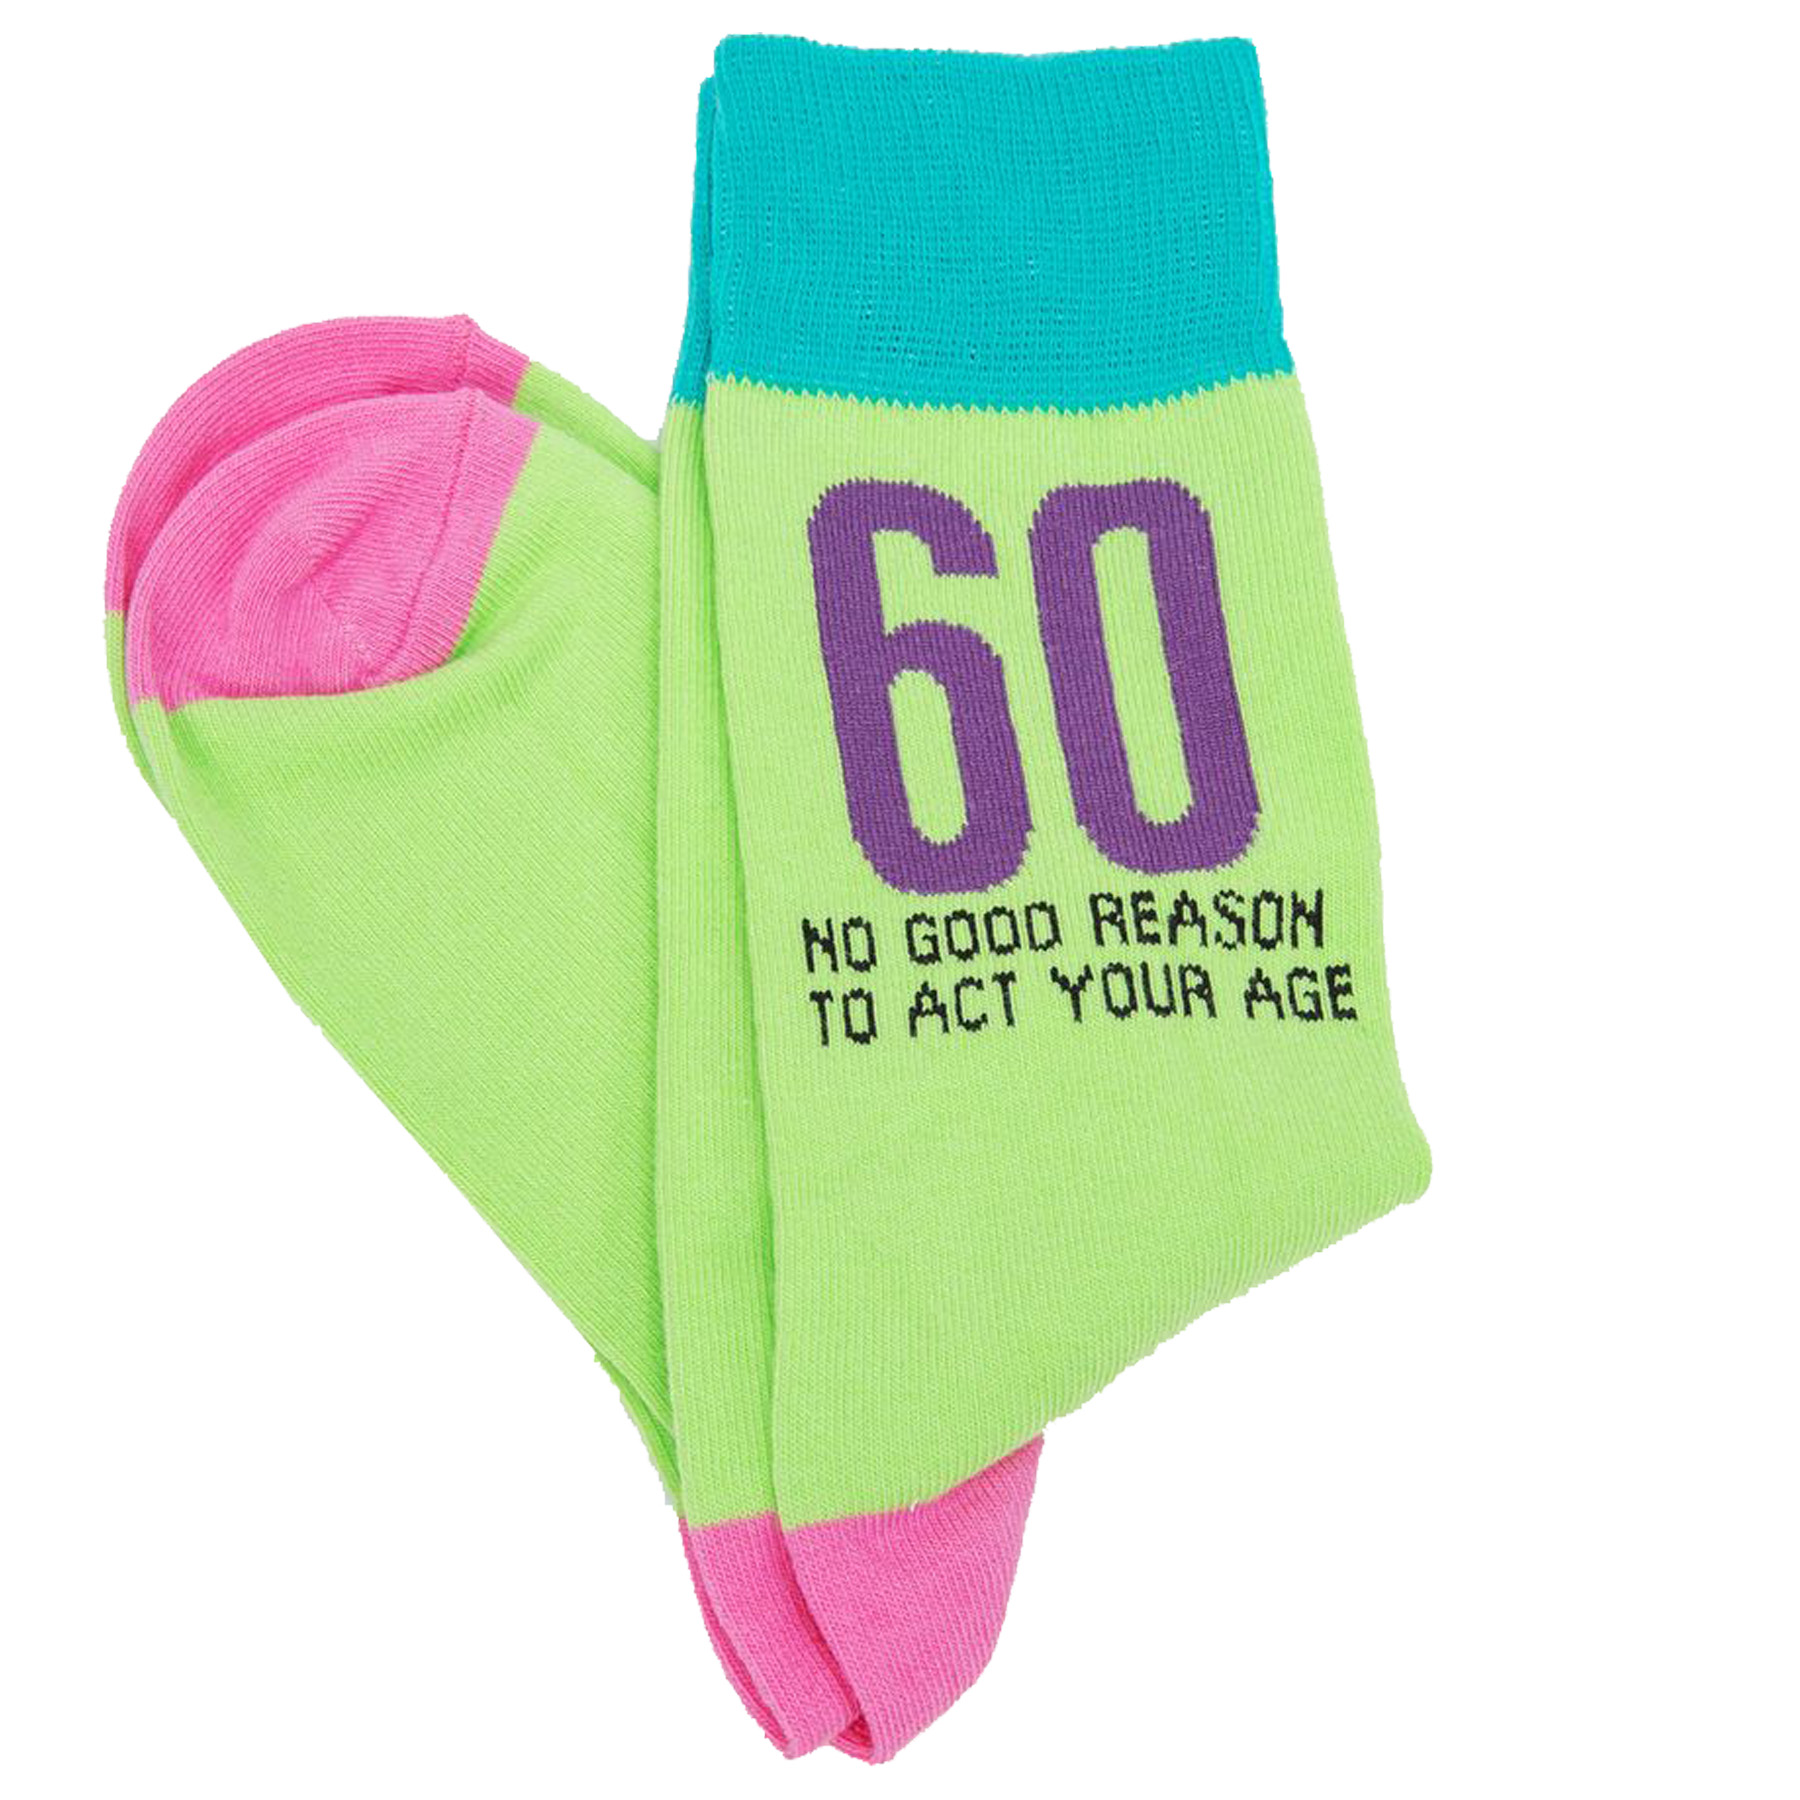 Men's Pair Colourful Socks Size 7-11 60th Birthday